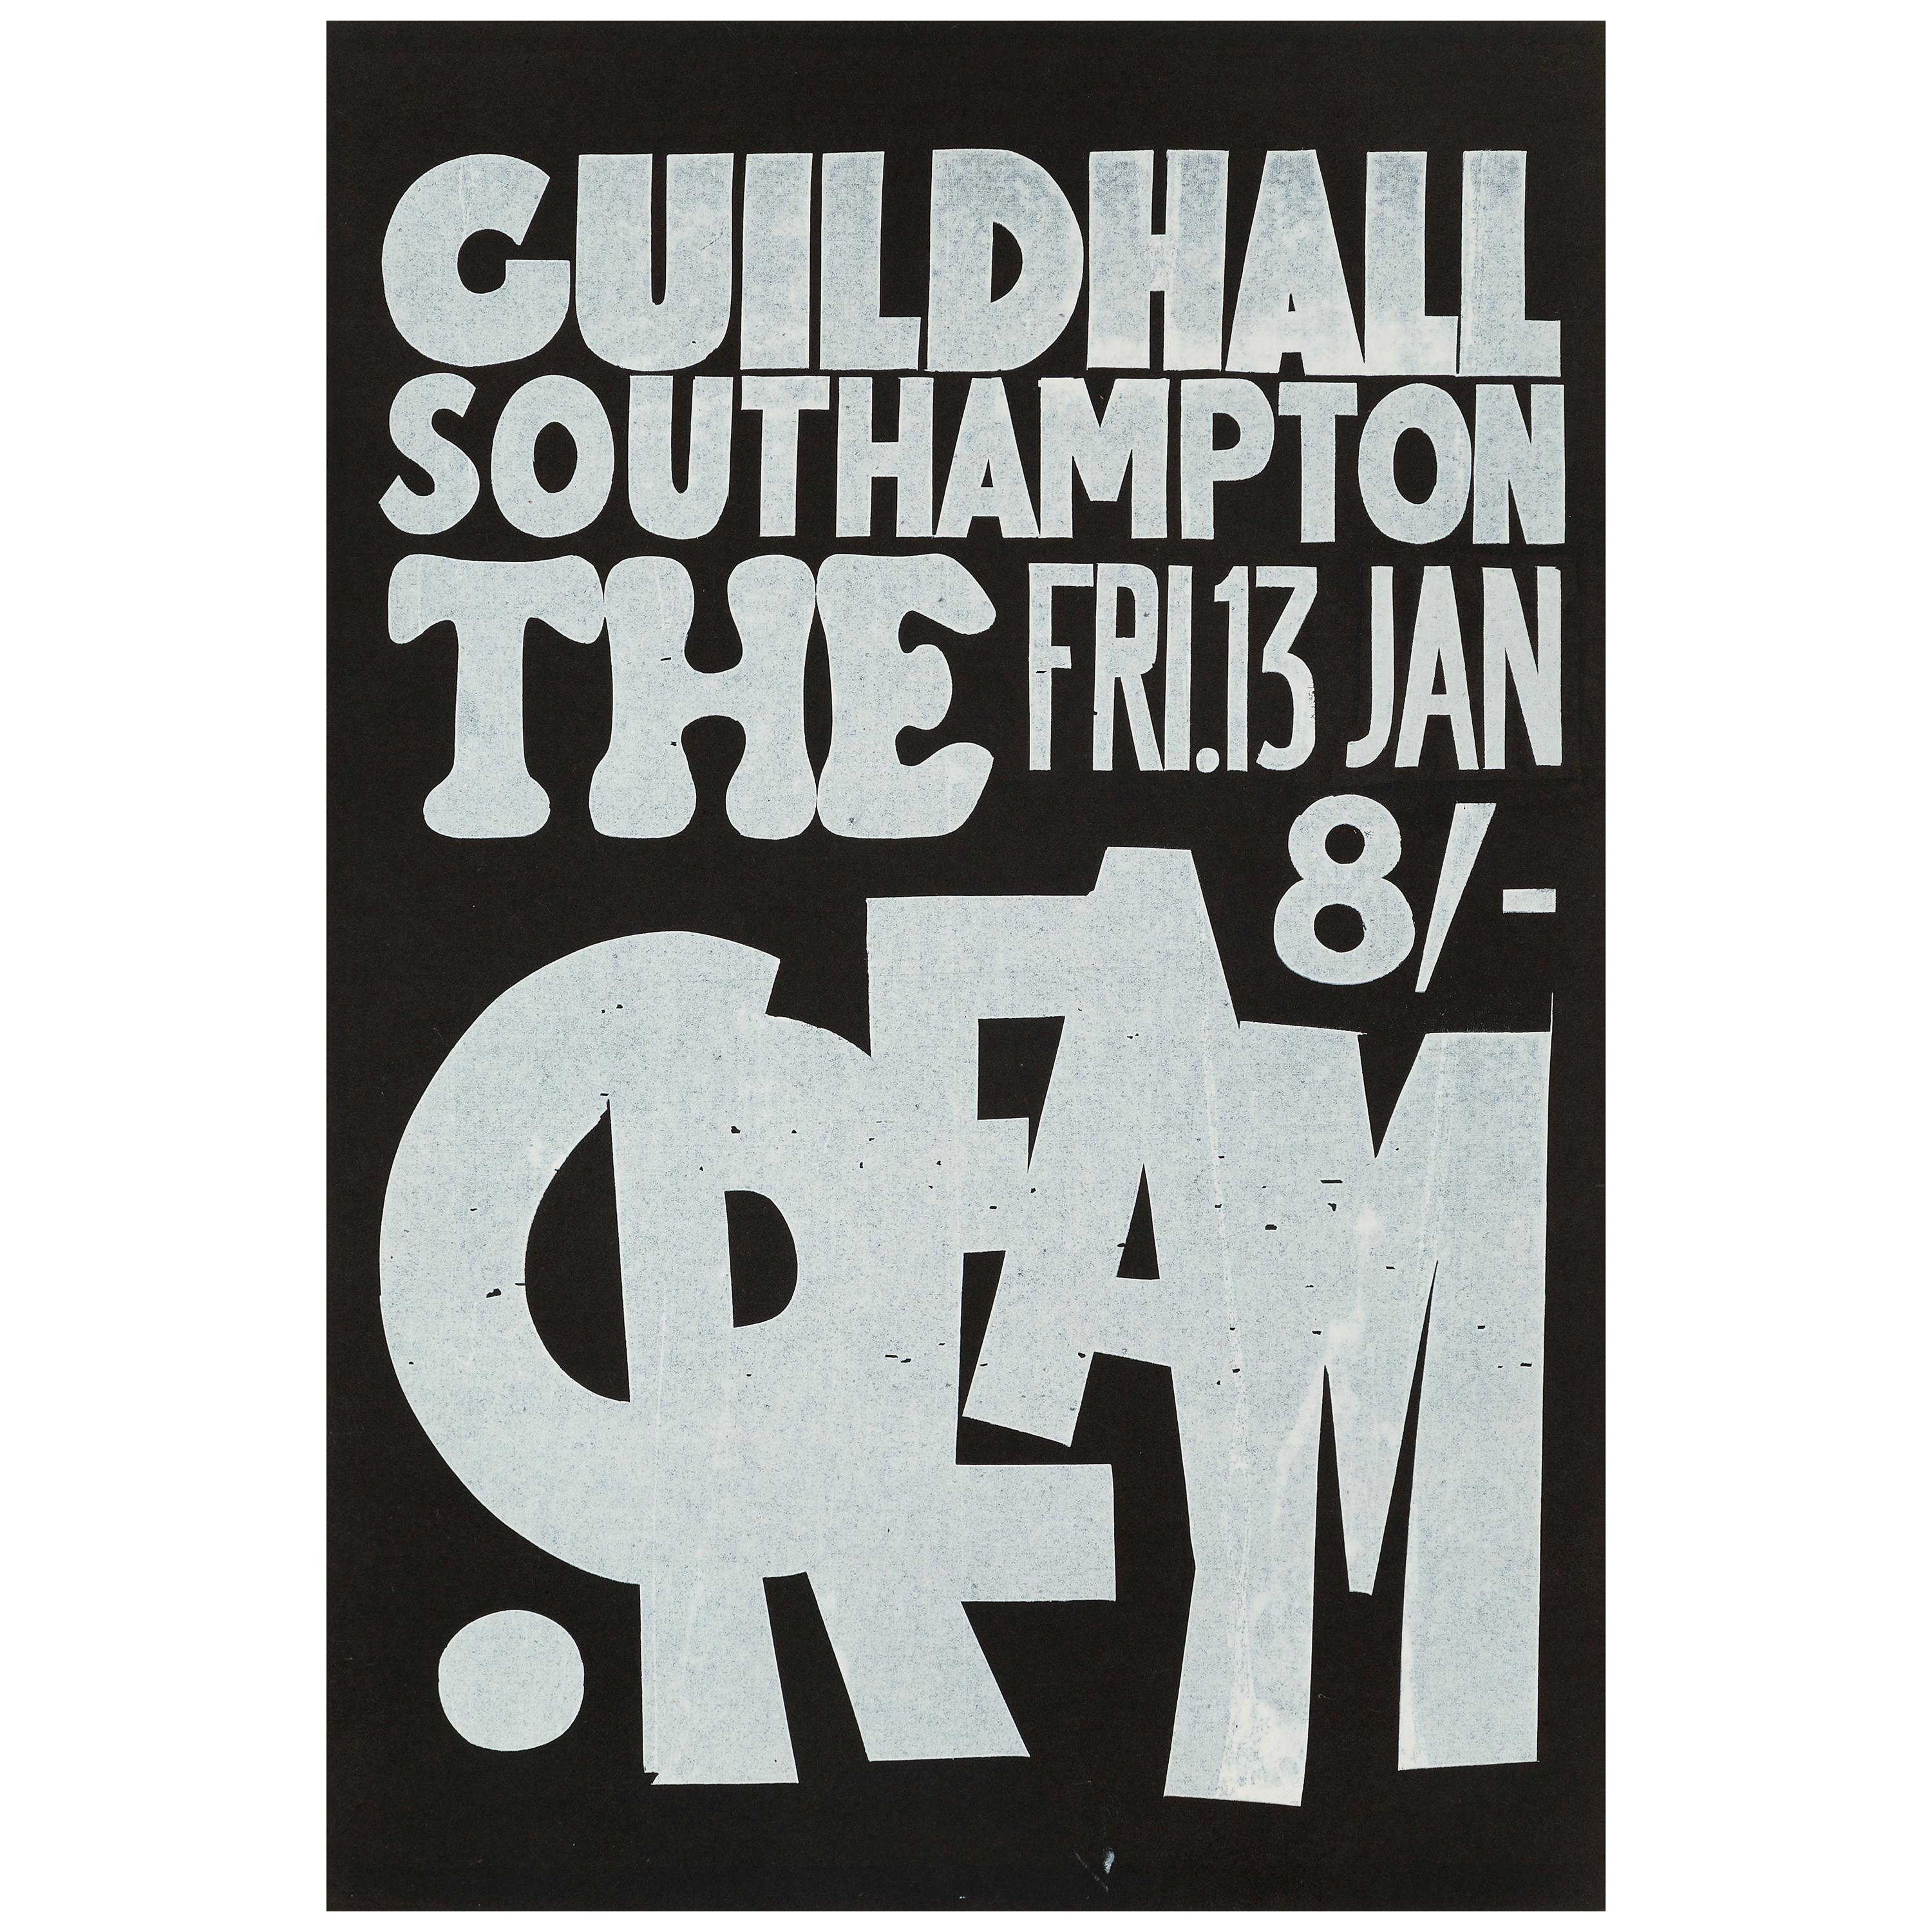 Cream Original Vintage UK Concert Poster, 1967